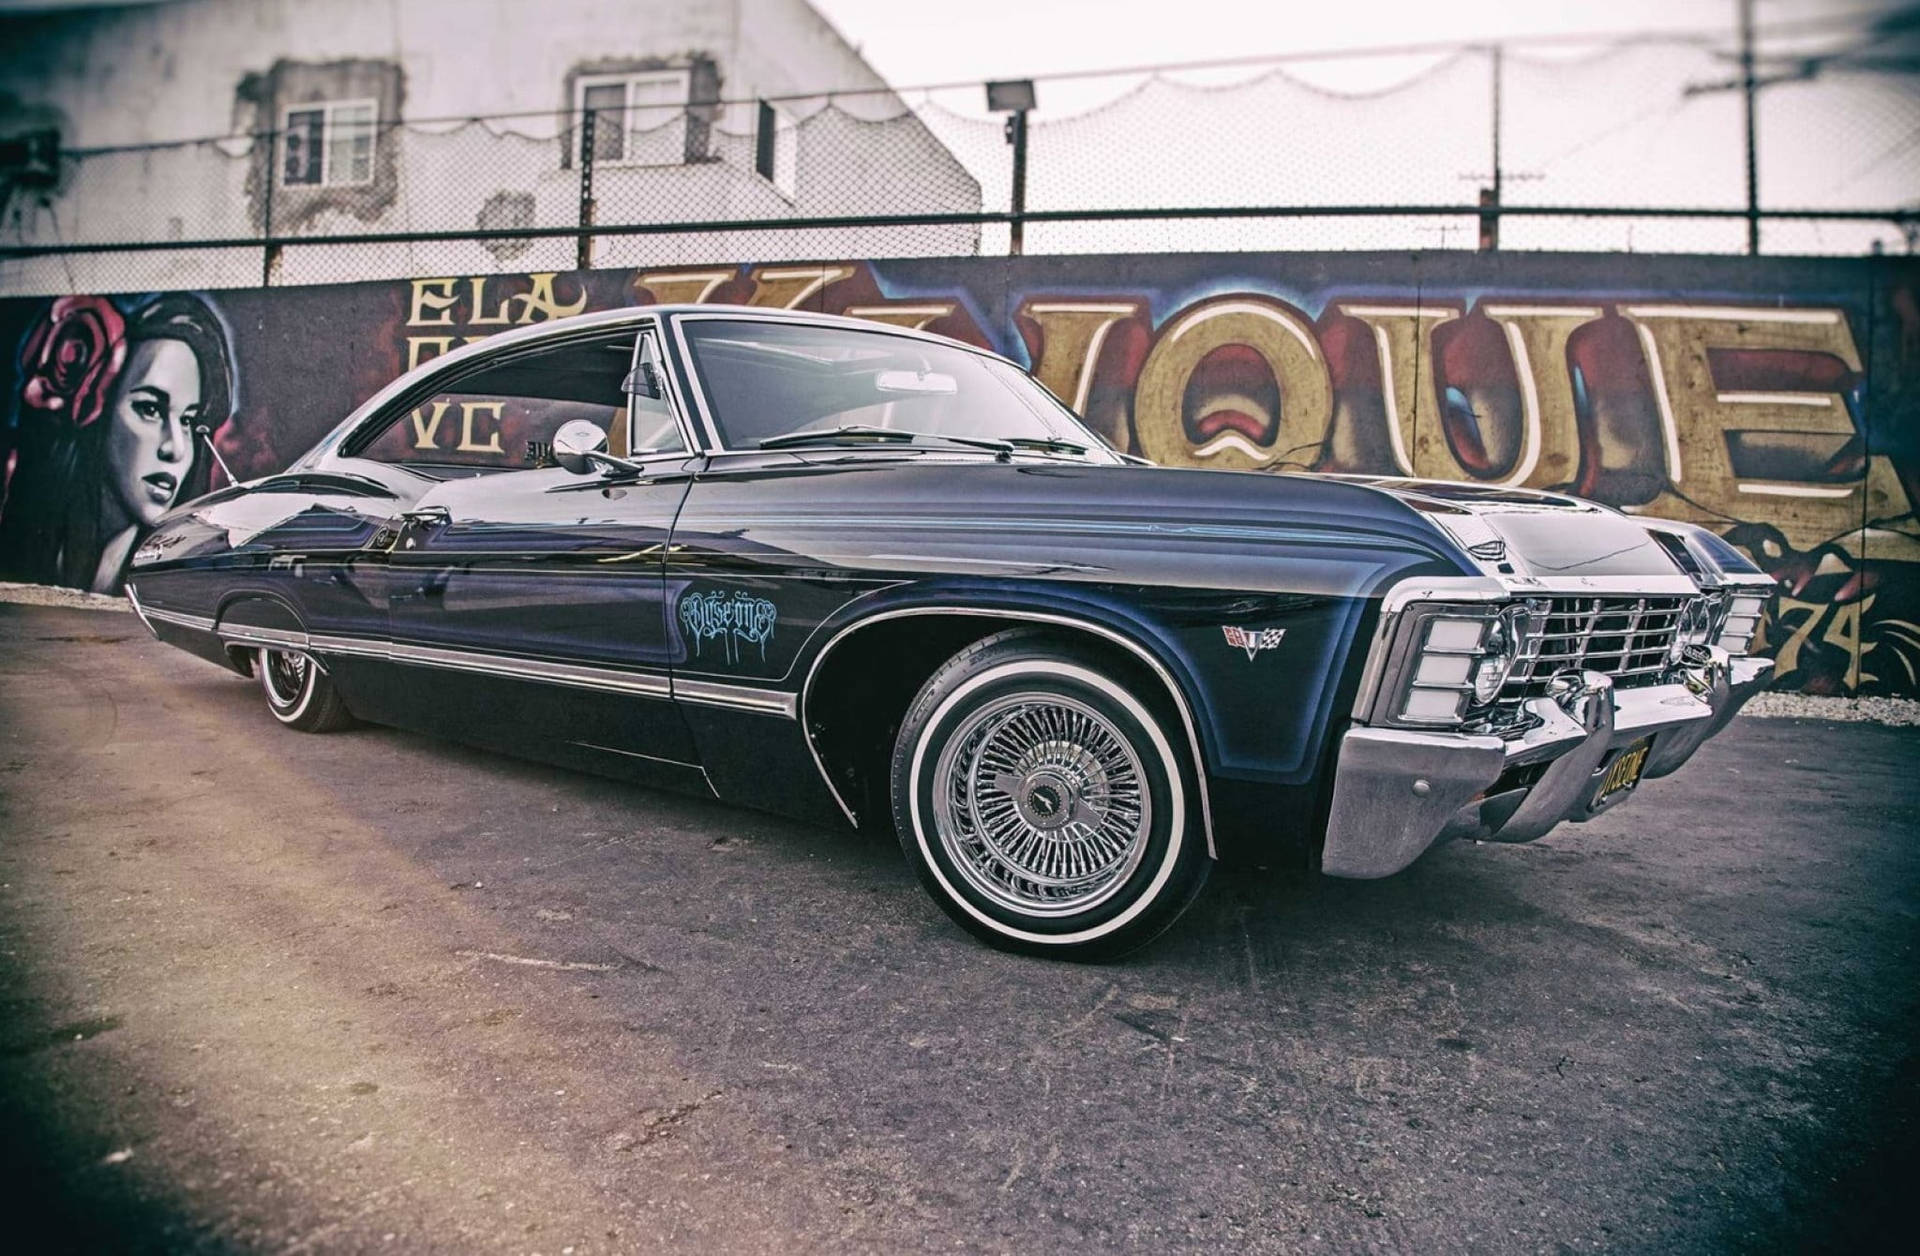 Vintage Elegance: 1967 Chevrolet Impala Background